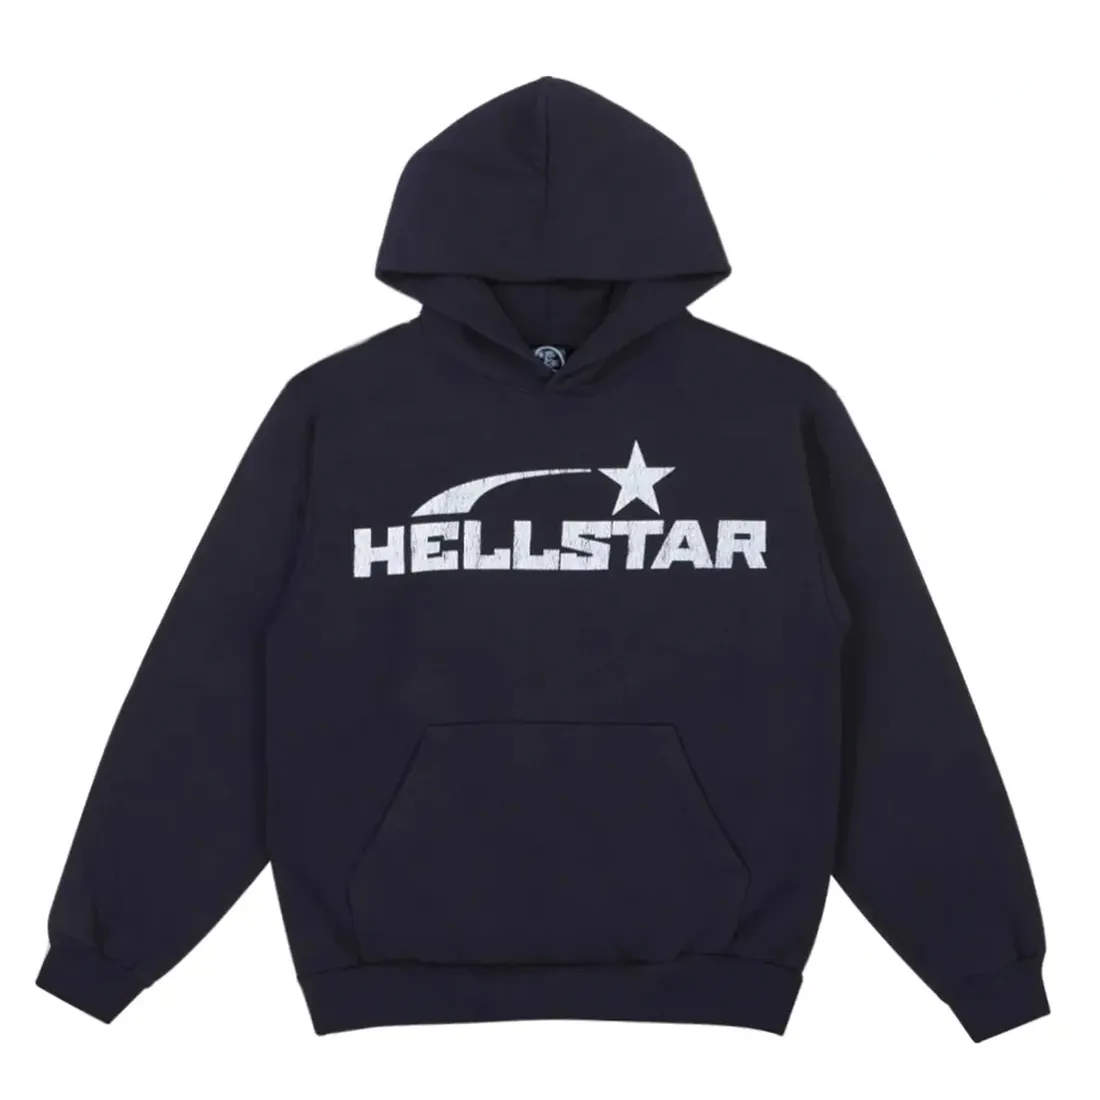 Hellstar Clothing: Redefining Urban Streetwear